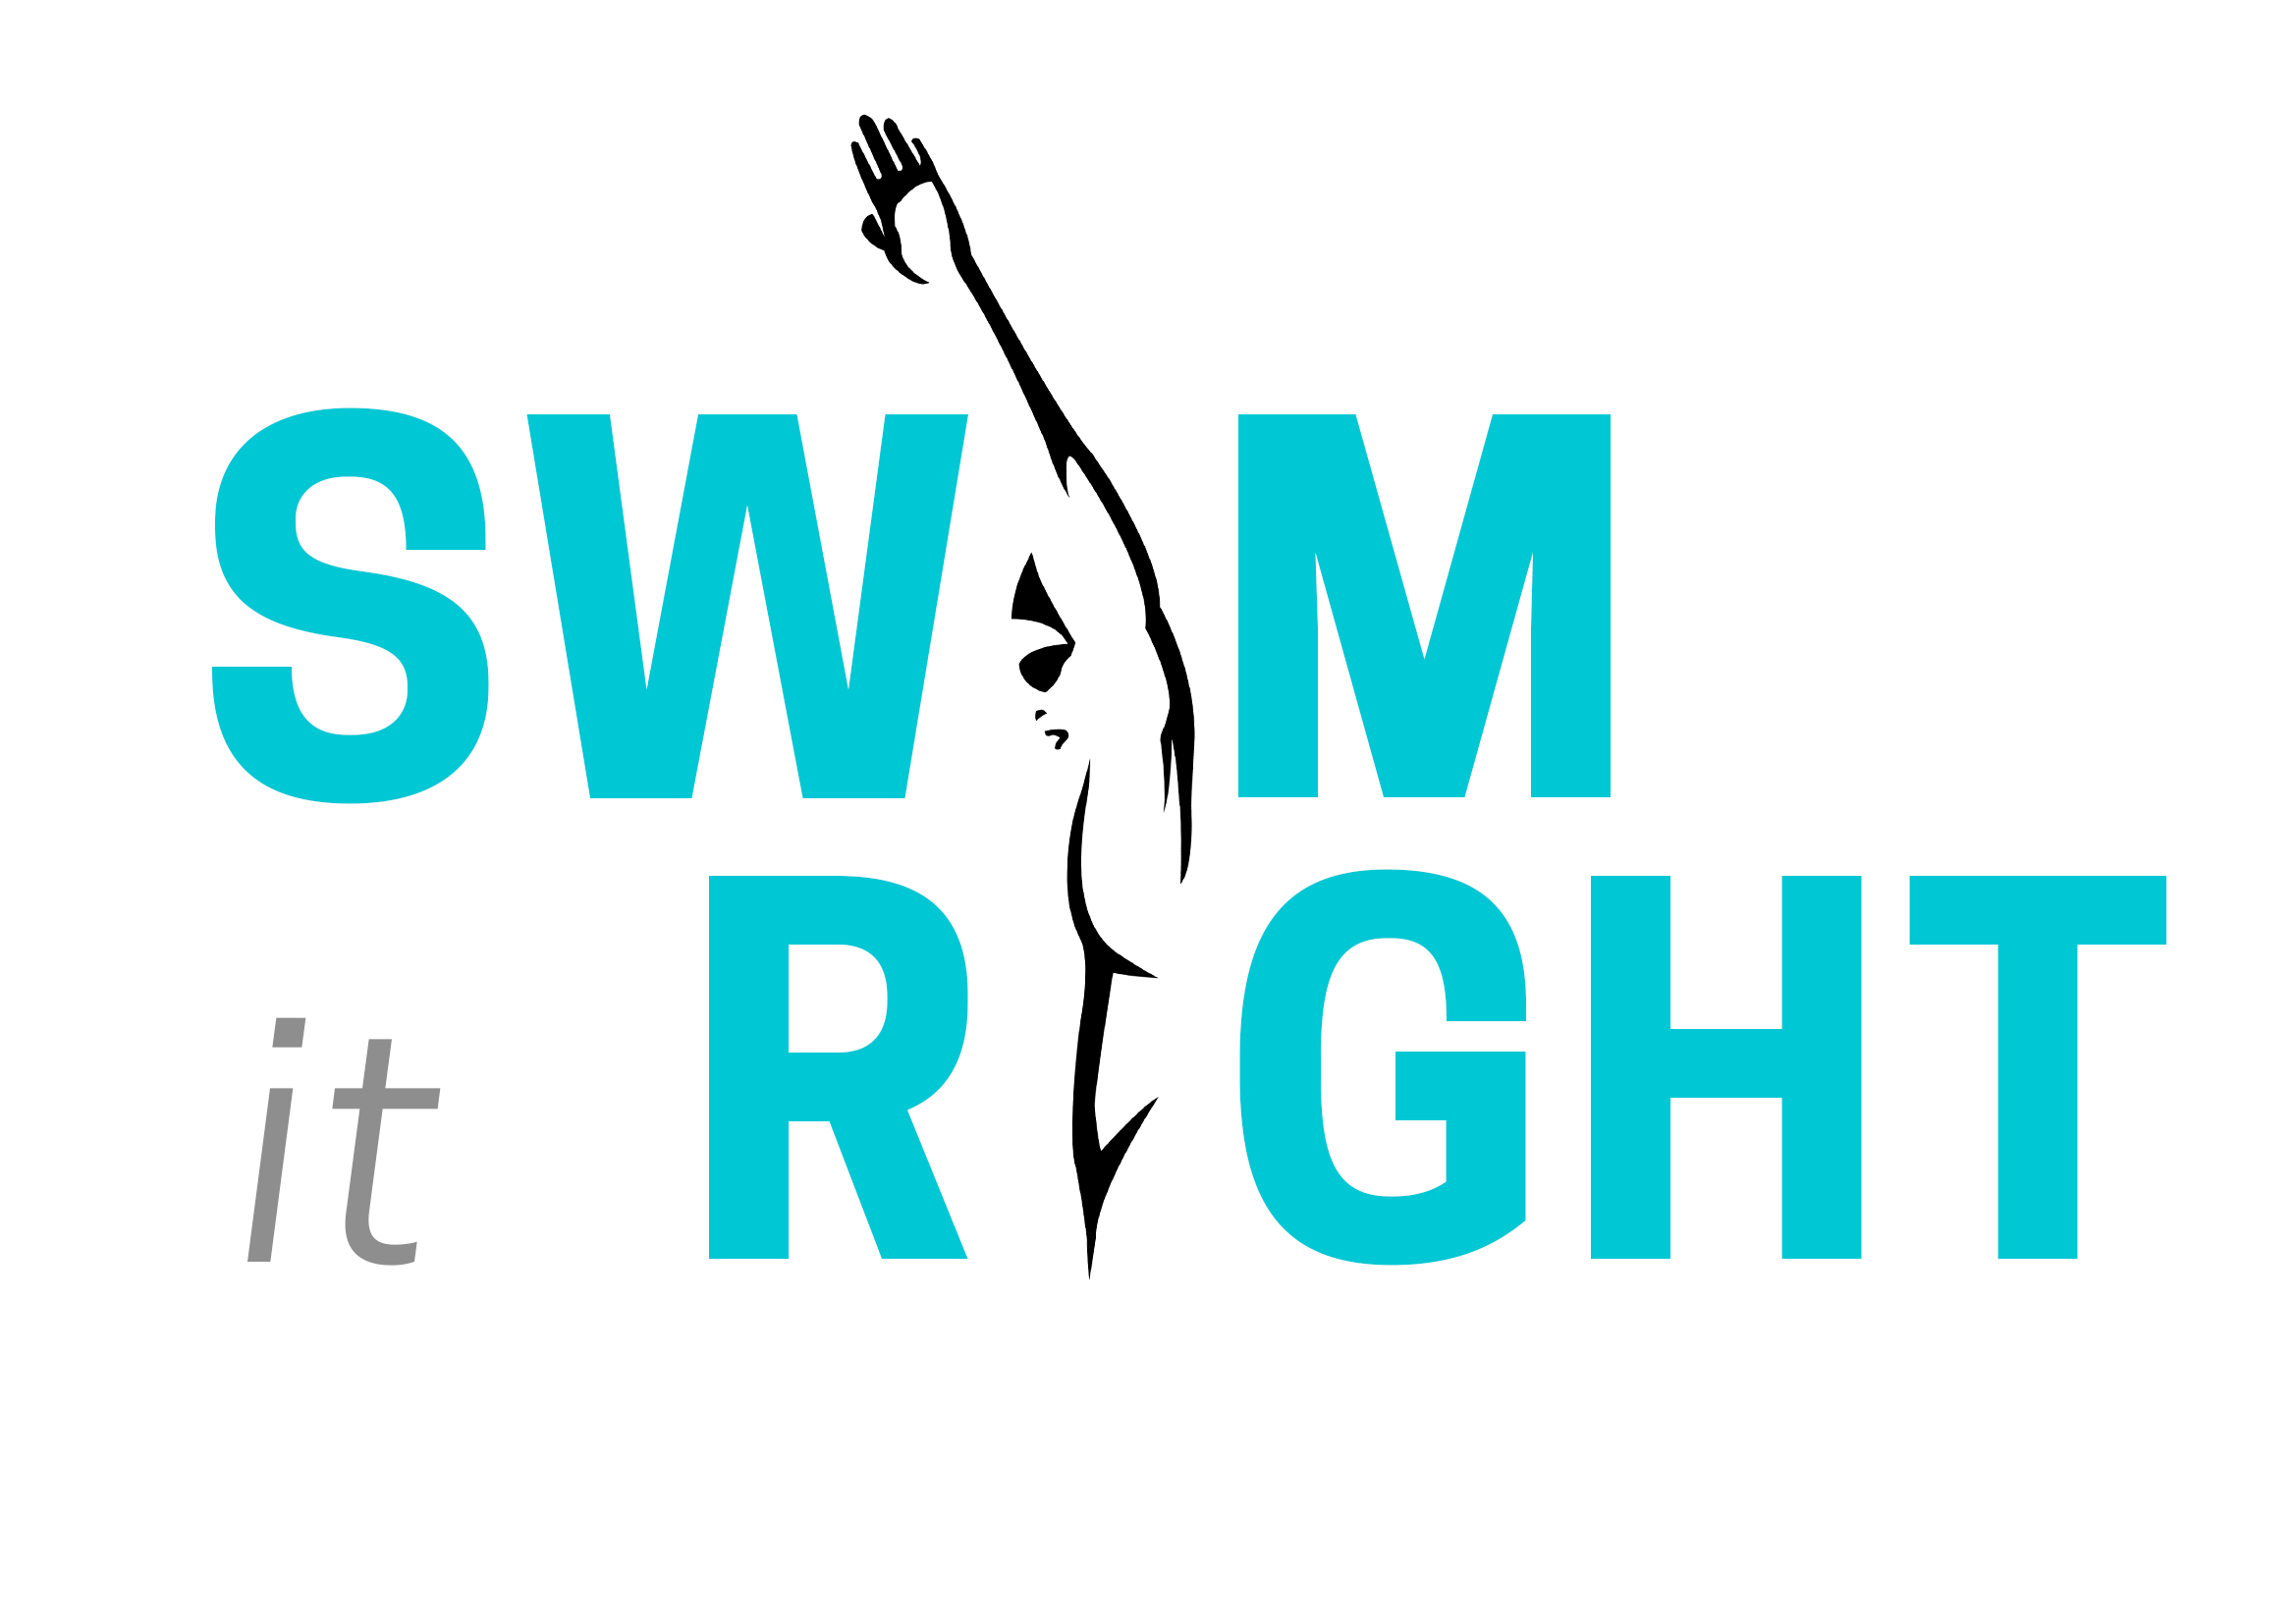 Let's Swim | Swim it Right